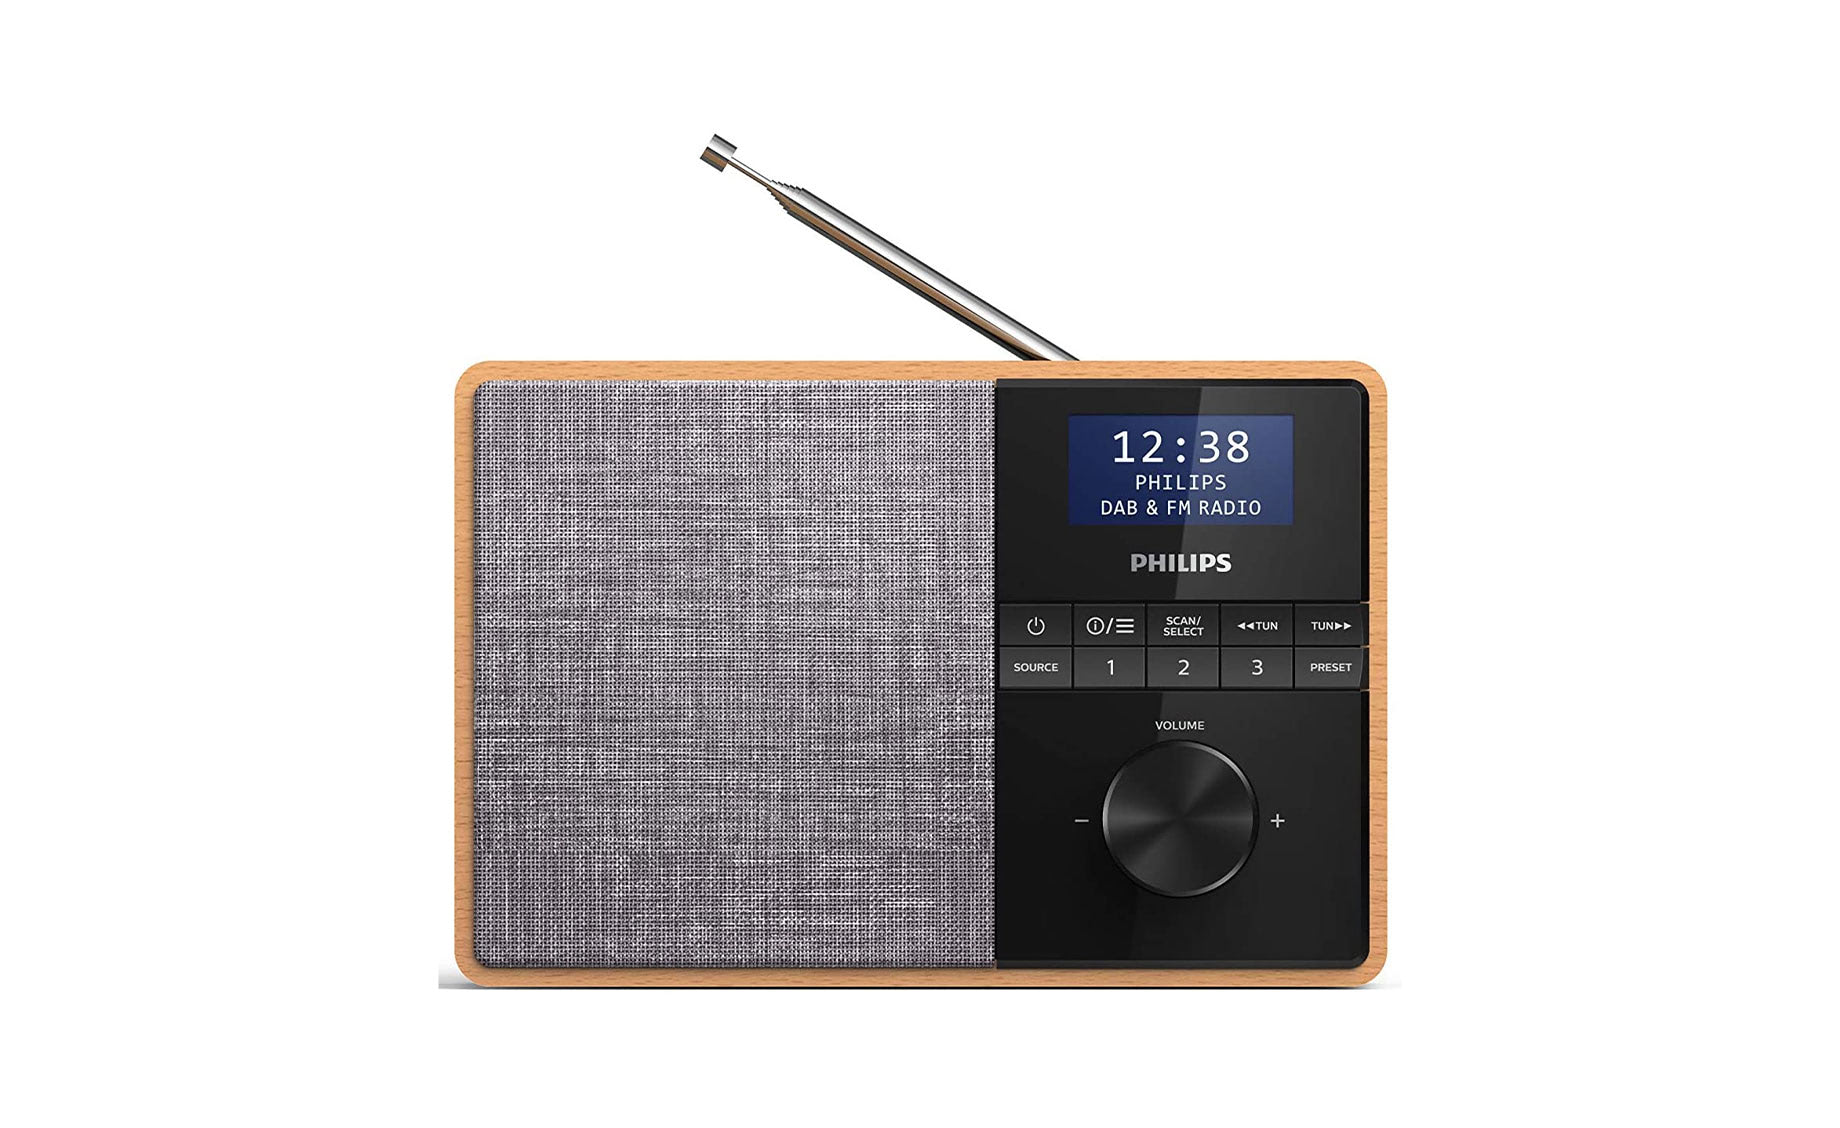 Philips TAR5505/10 DAB+ FM radio